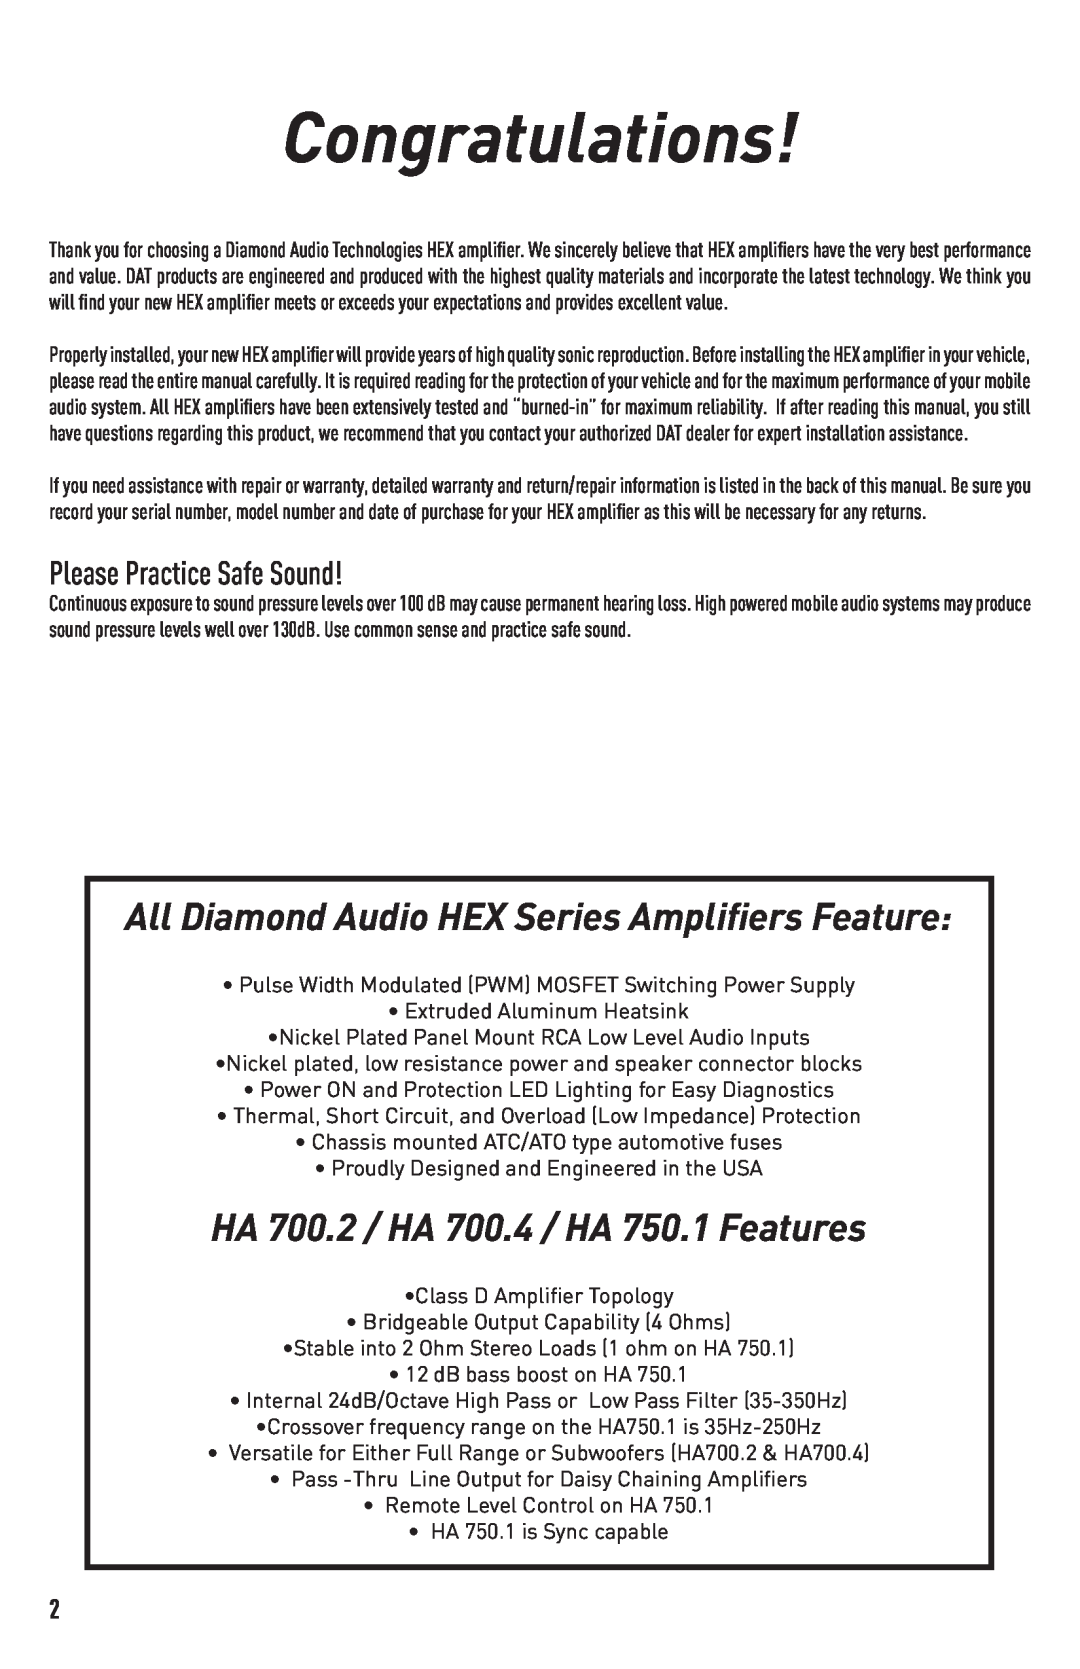 Diamond Audio Technology Congratulations, HA 700.2 / HA 700.4 / HA 750.1 Features, Please Practice Safe Sound 